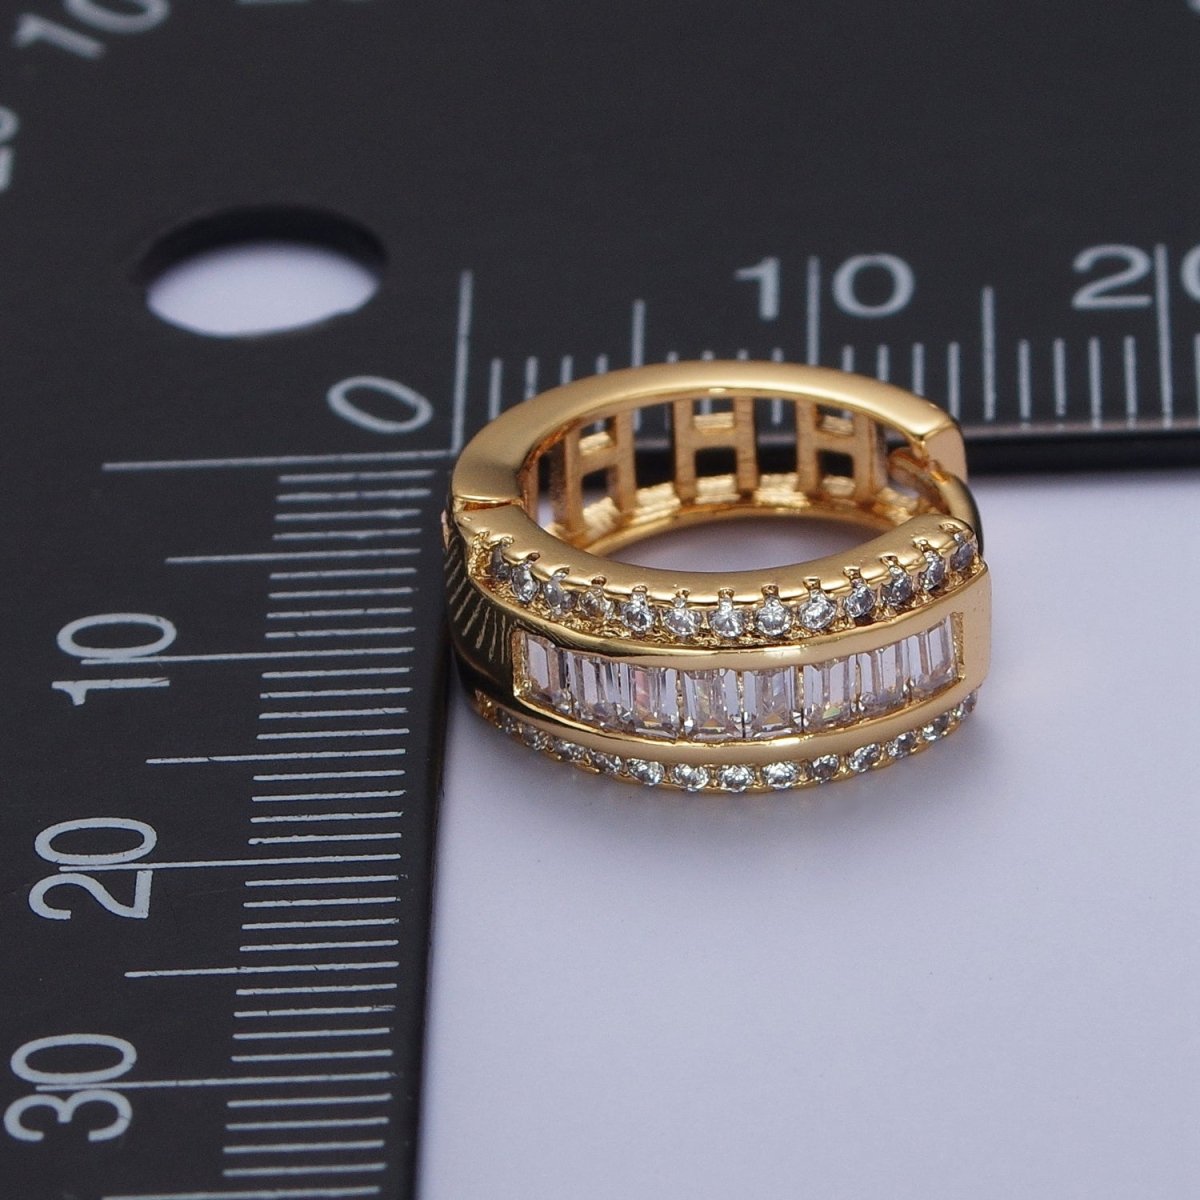 16K Gold Filled Micro Paved Baguette Lined Cubic Zirconia Huggie Hoops Earrings | X-844 - DLUXCA